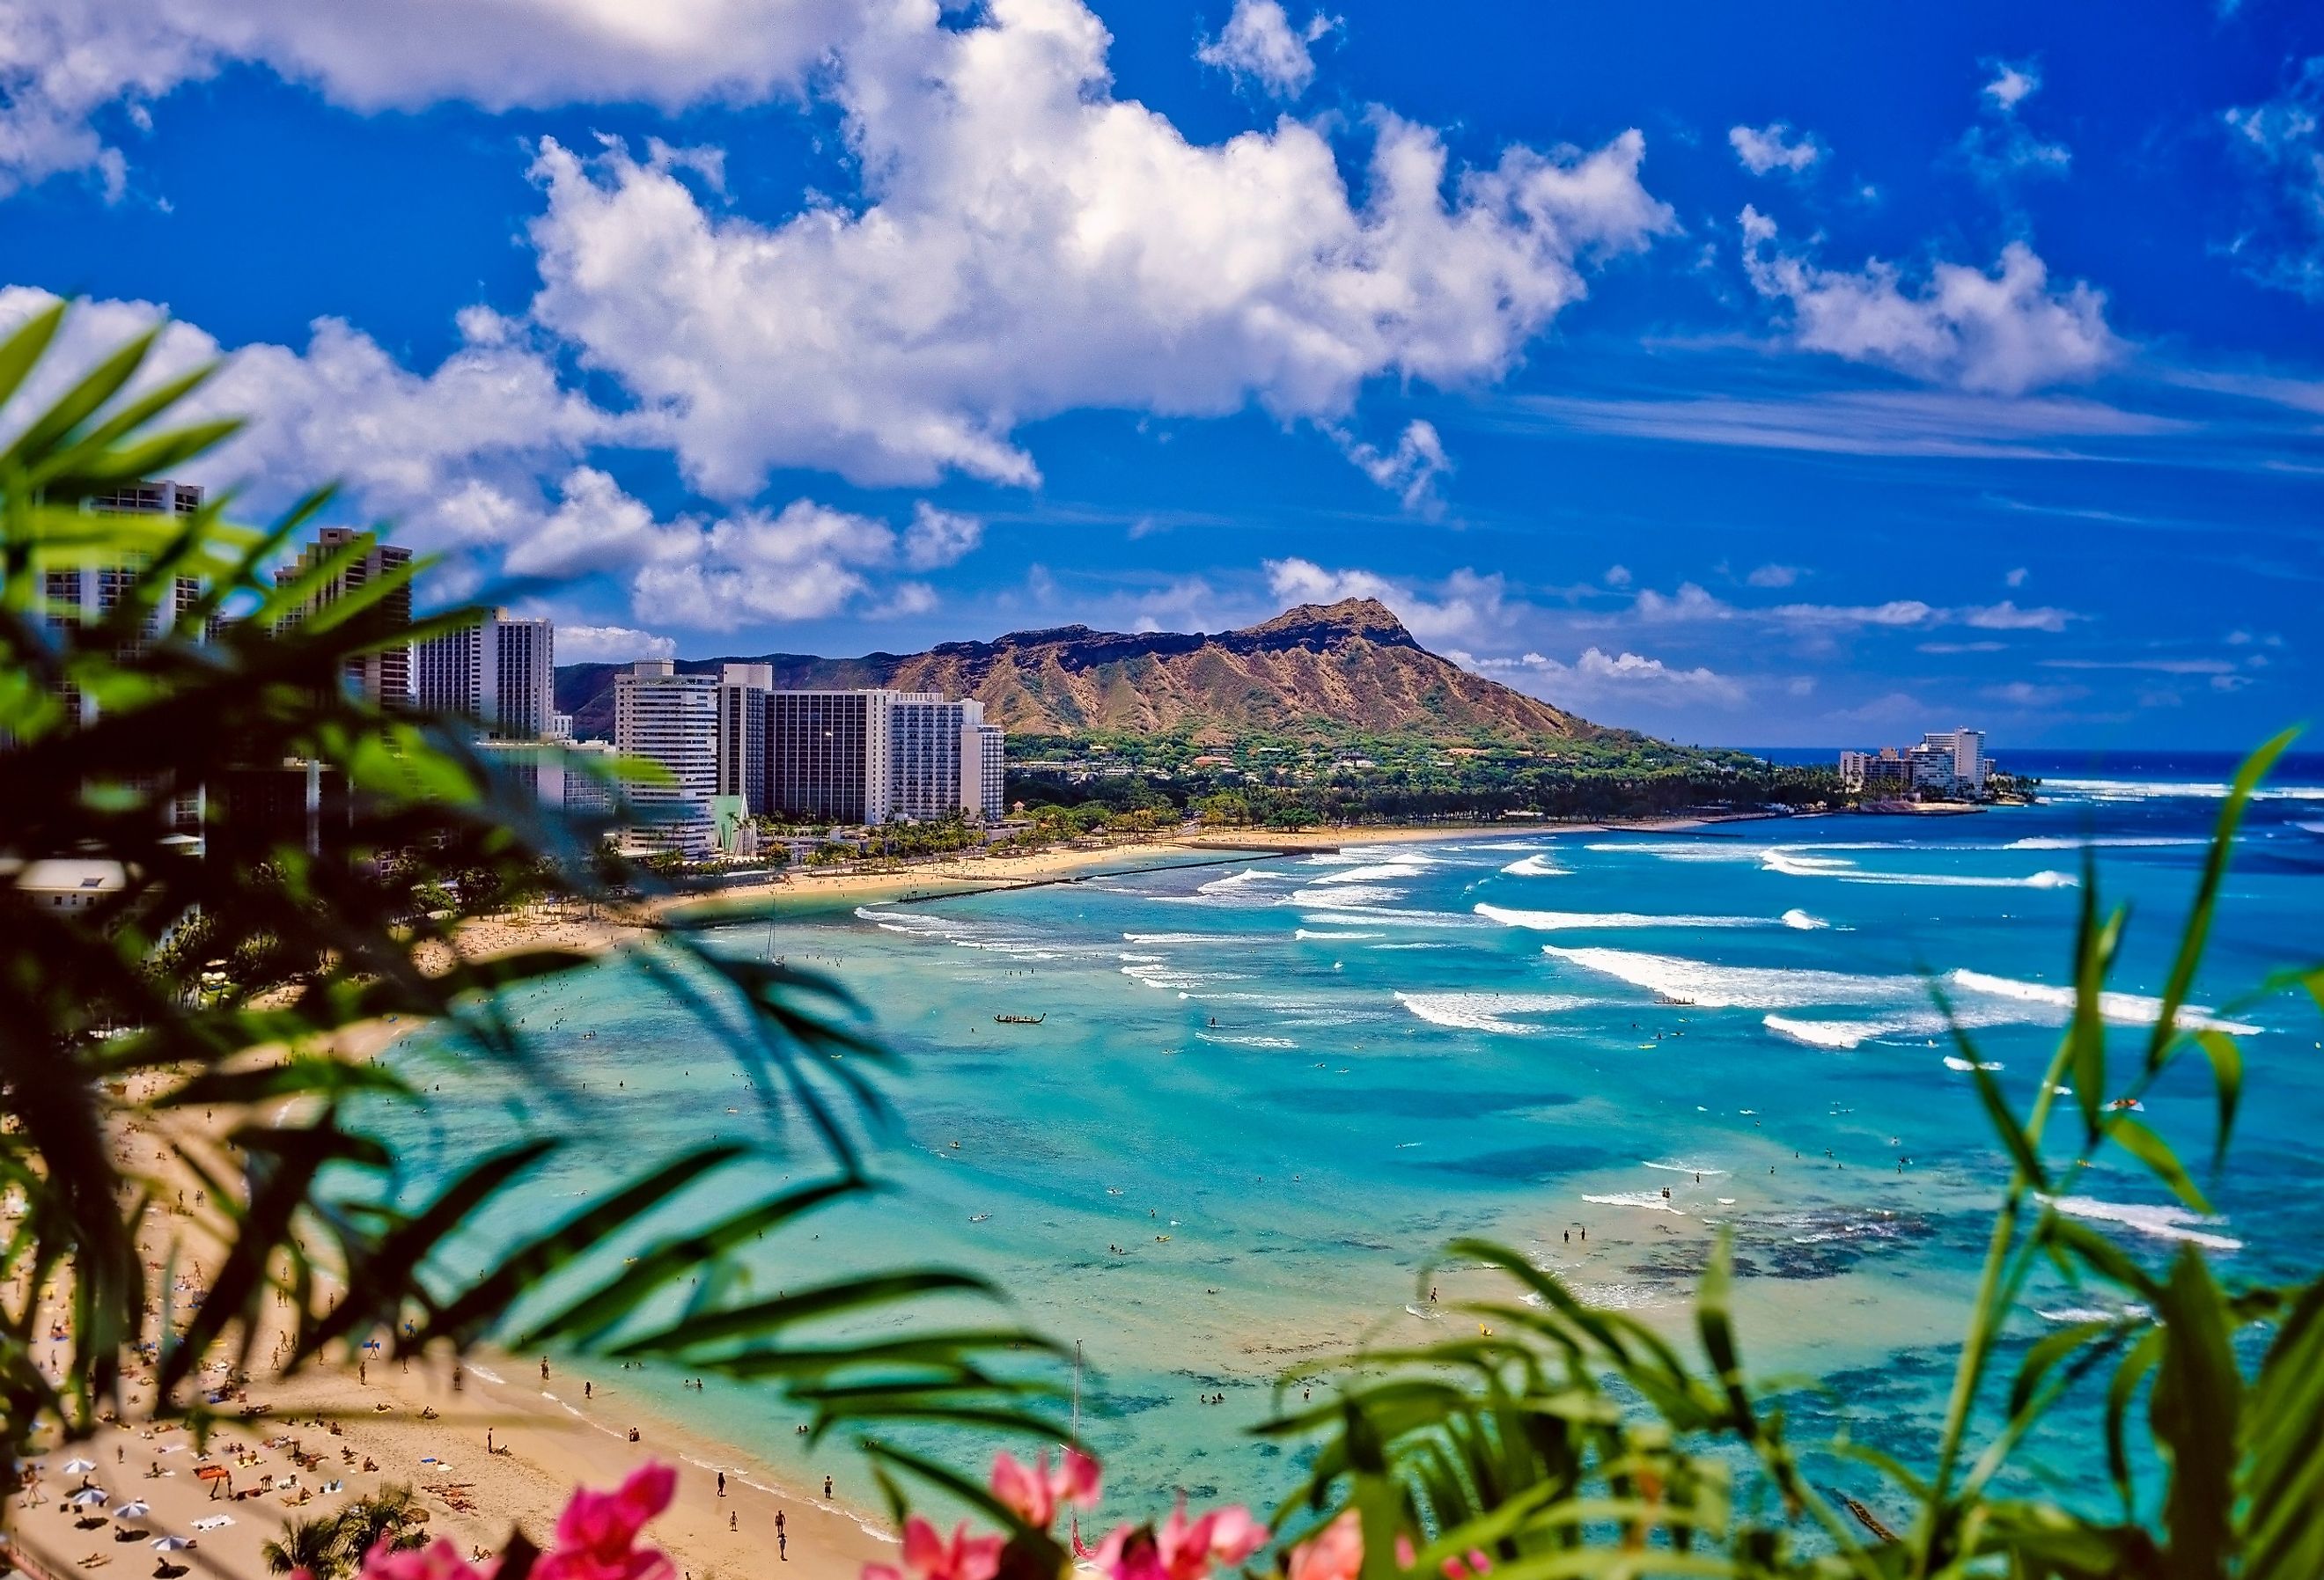 Beautiful Waikiki Beach and Diamond Head in Waikiki, Hawaii. Image credit tomas del amo via Adobe Stock. 